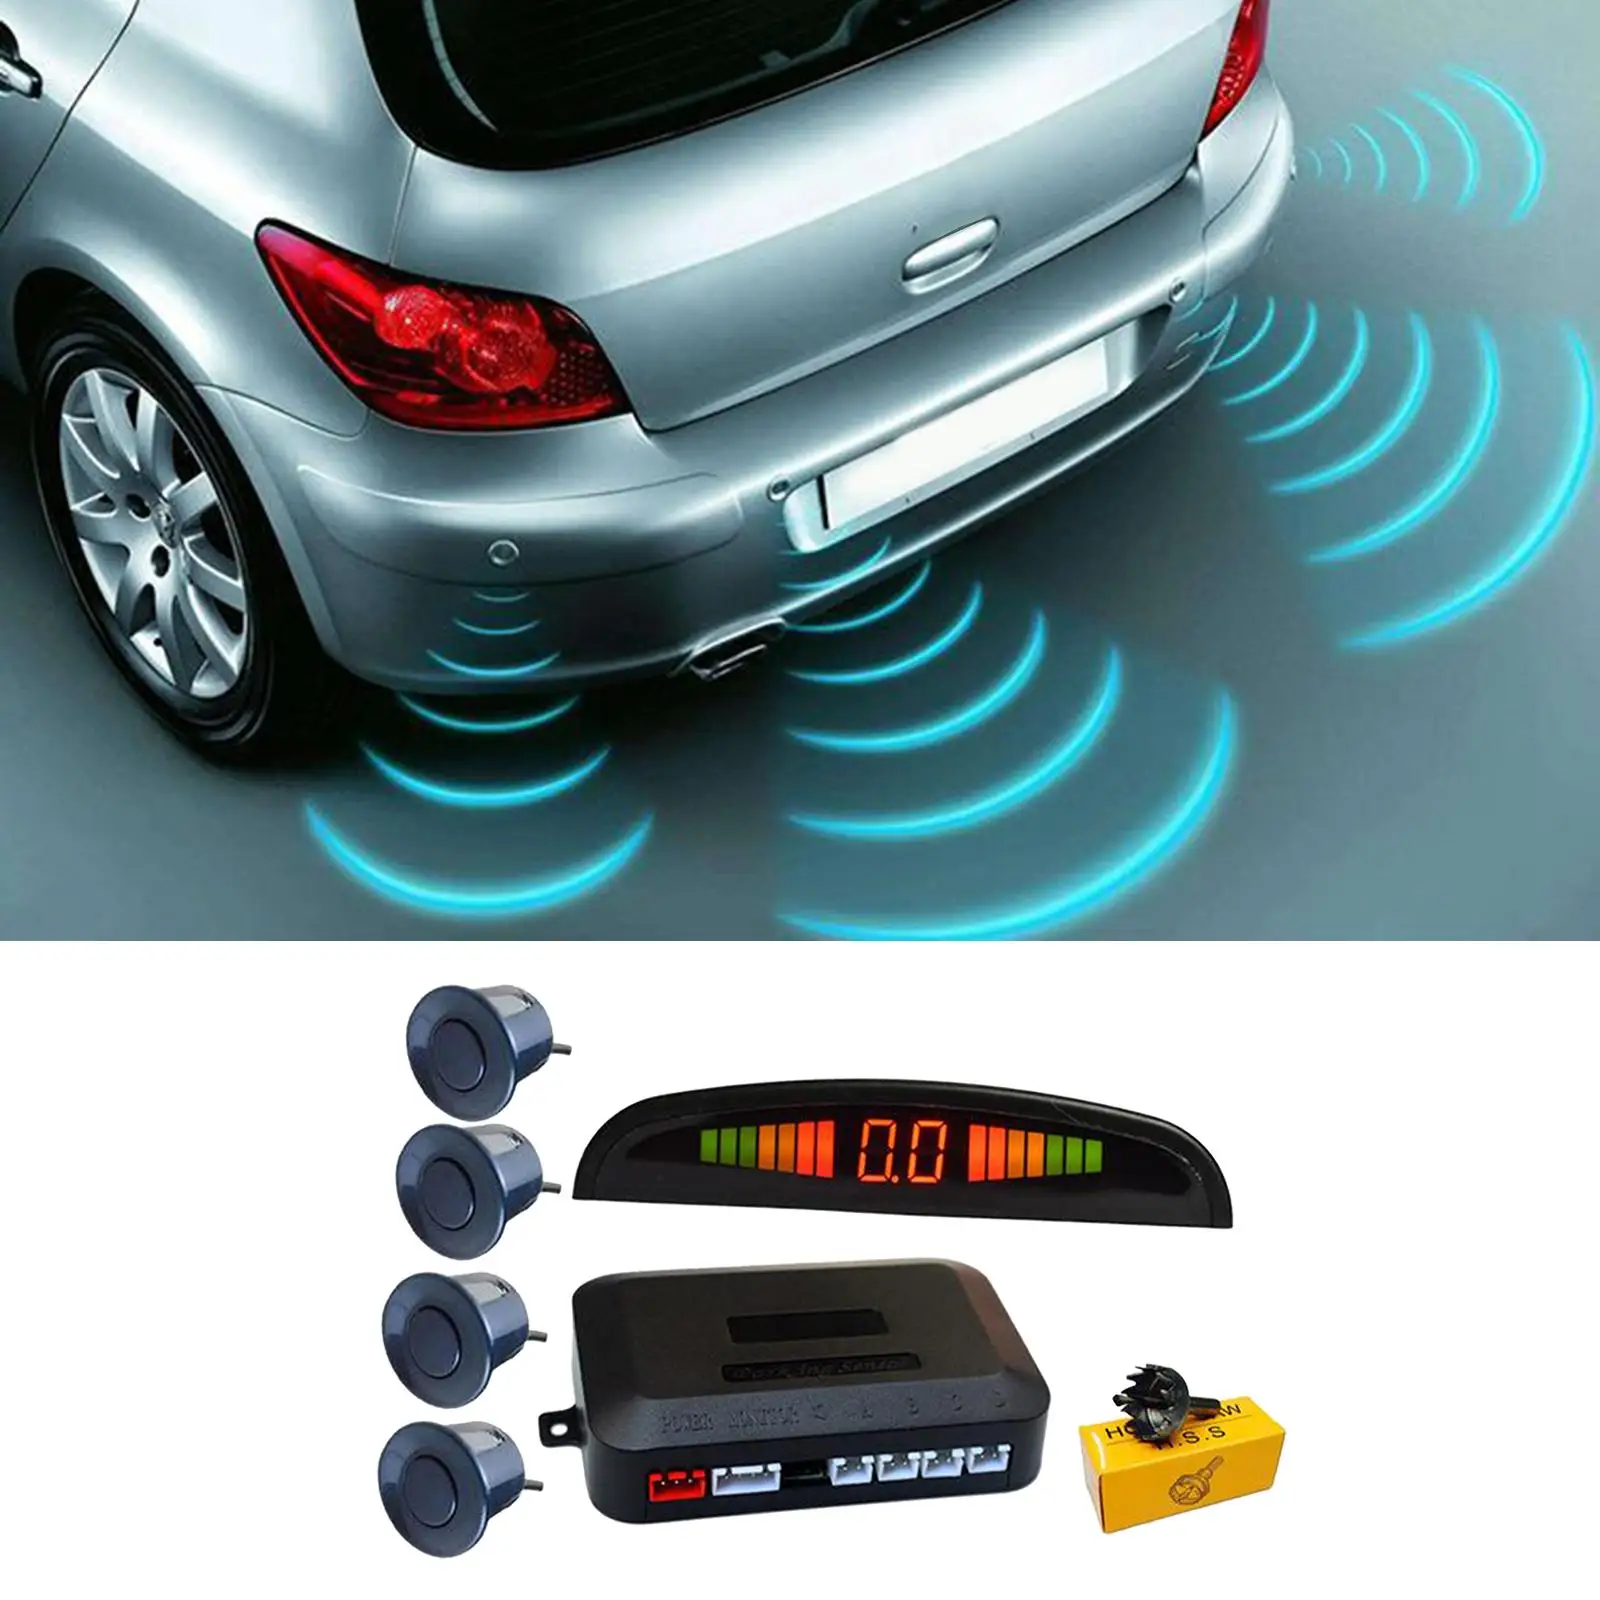 LED Display Parking Sensor, Car   System, LED Display + Buzzer  +   for  Vehicle